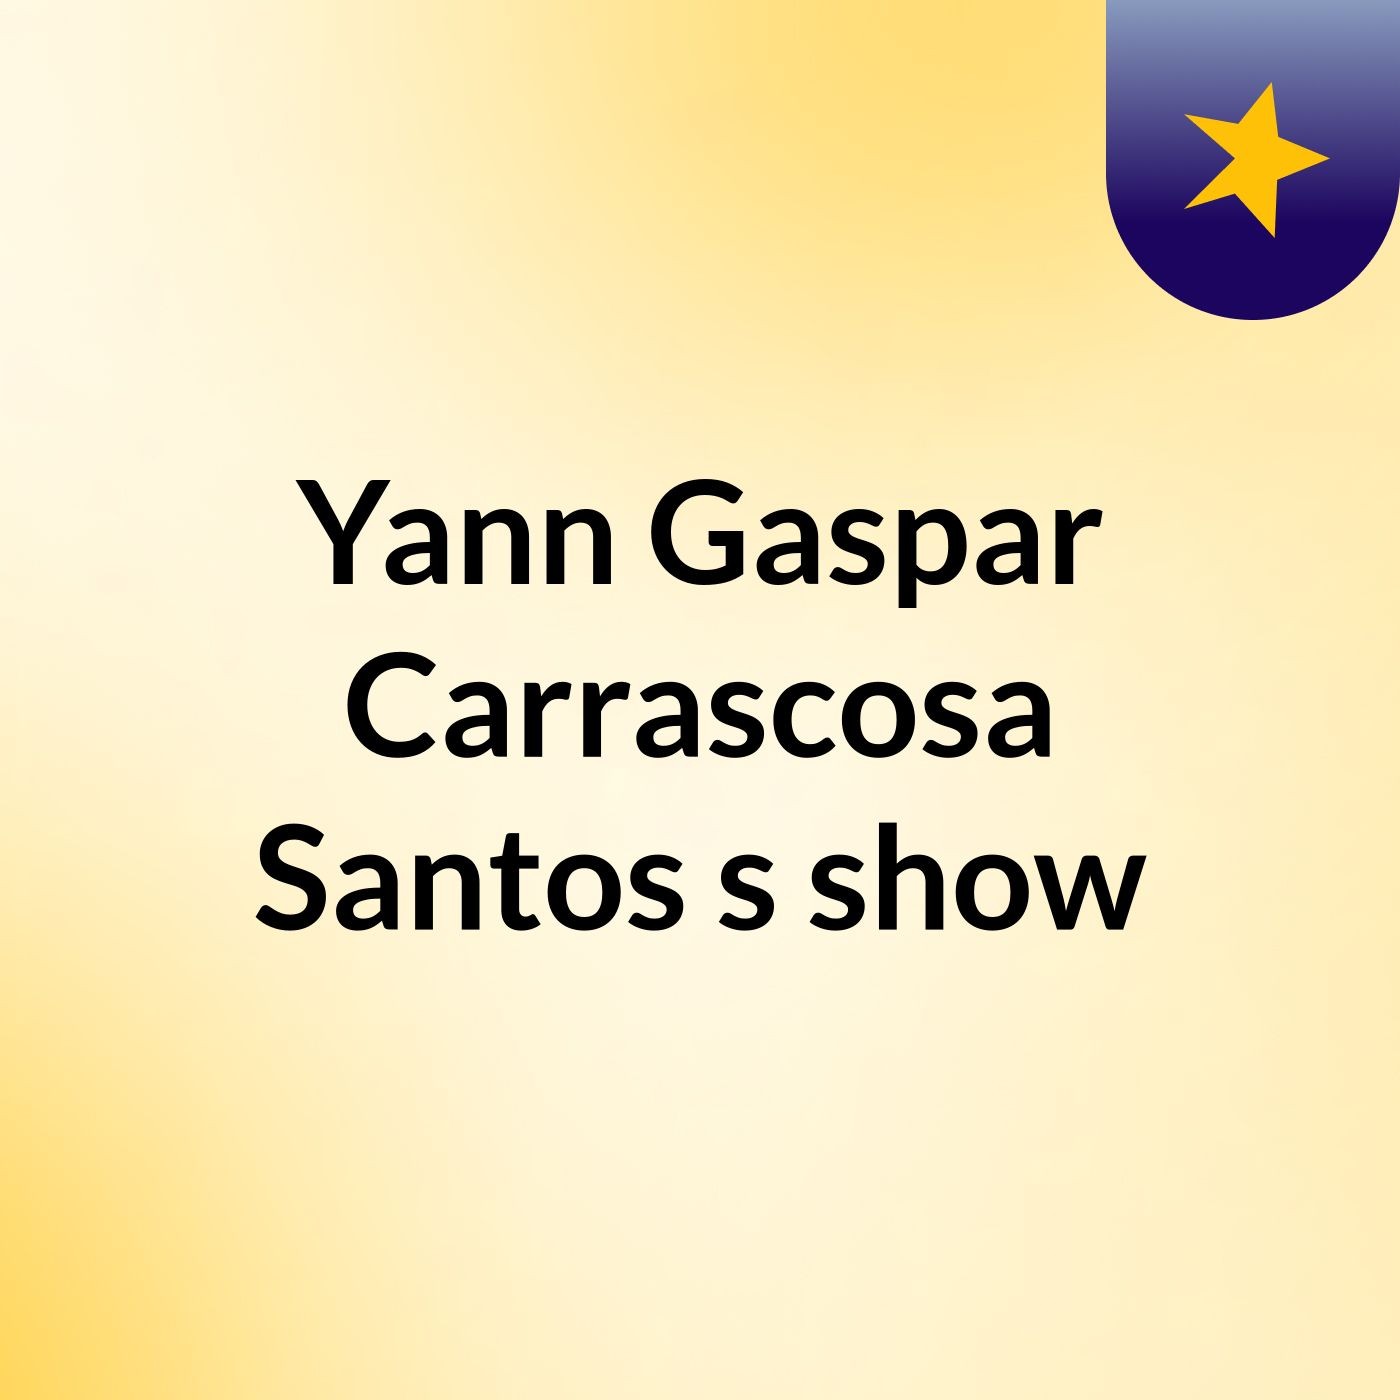 Episódio 3 - Yann Gaspar Carrascosa Santos's show